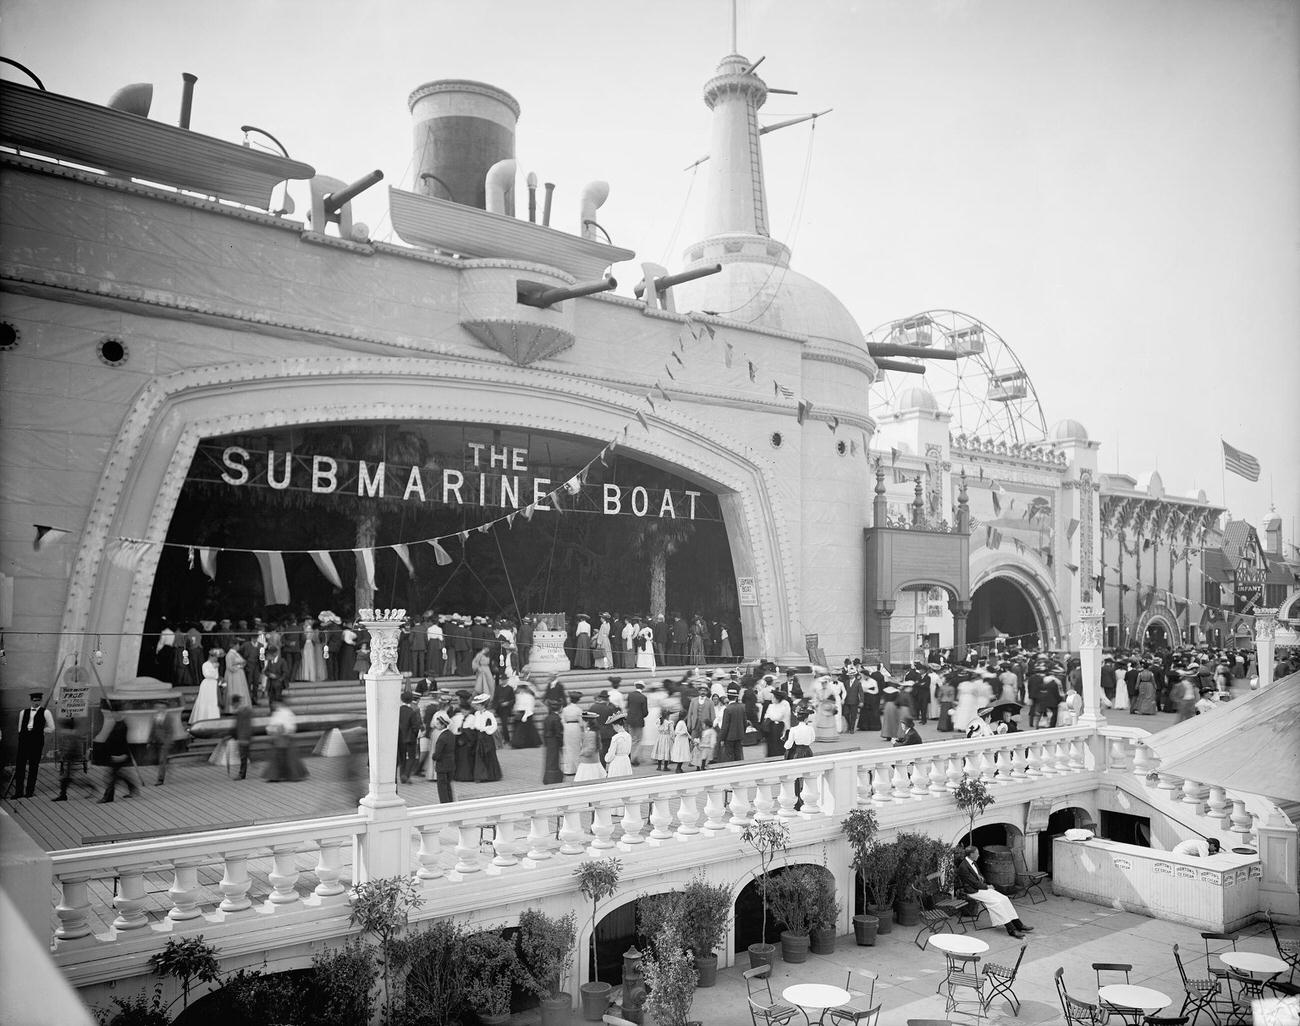 Submarine Boat Building At Coney Island, 1900